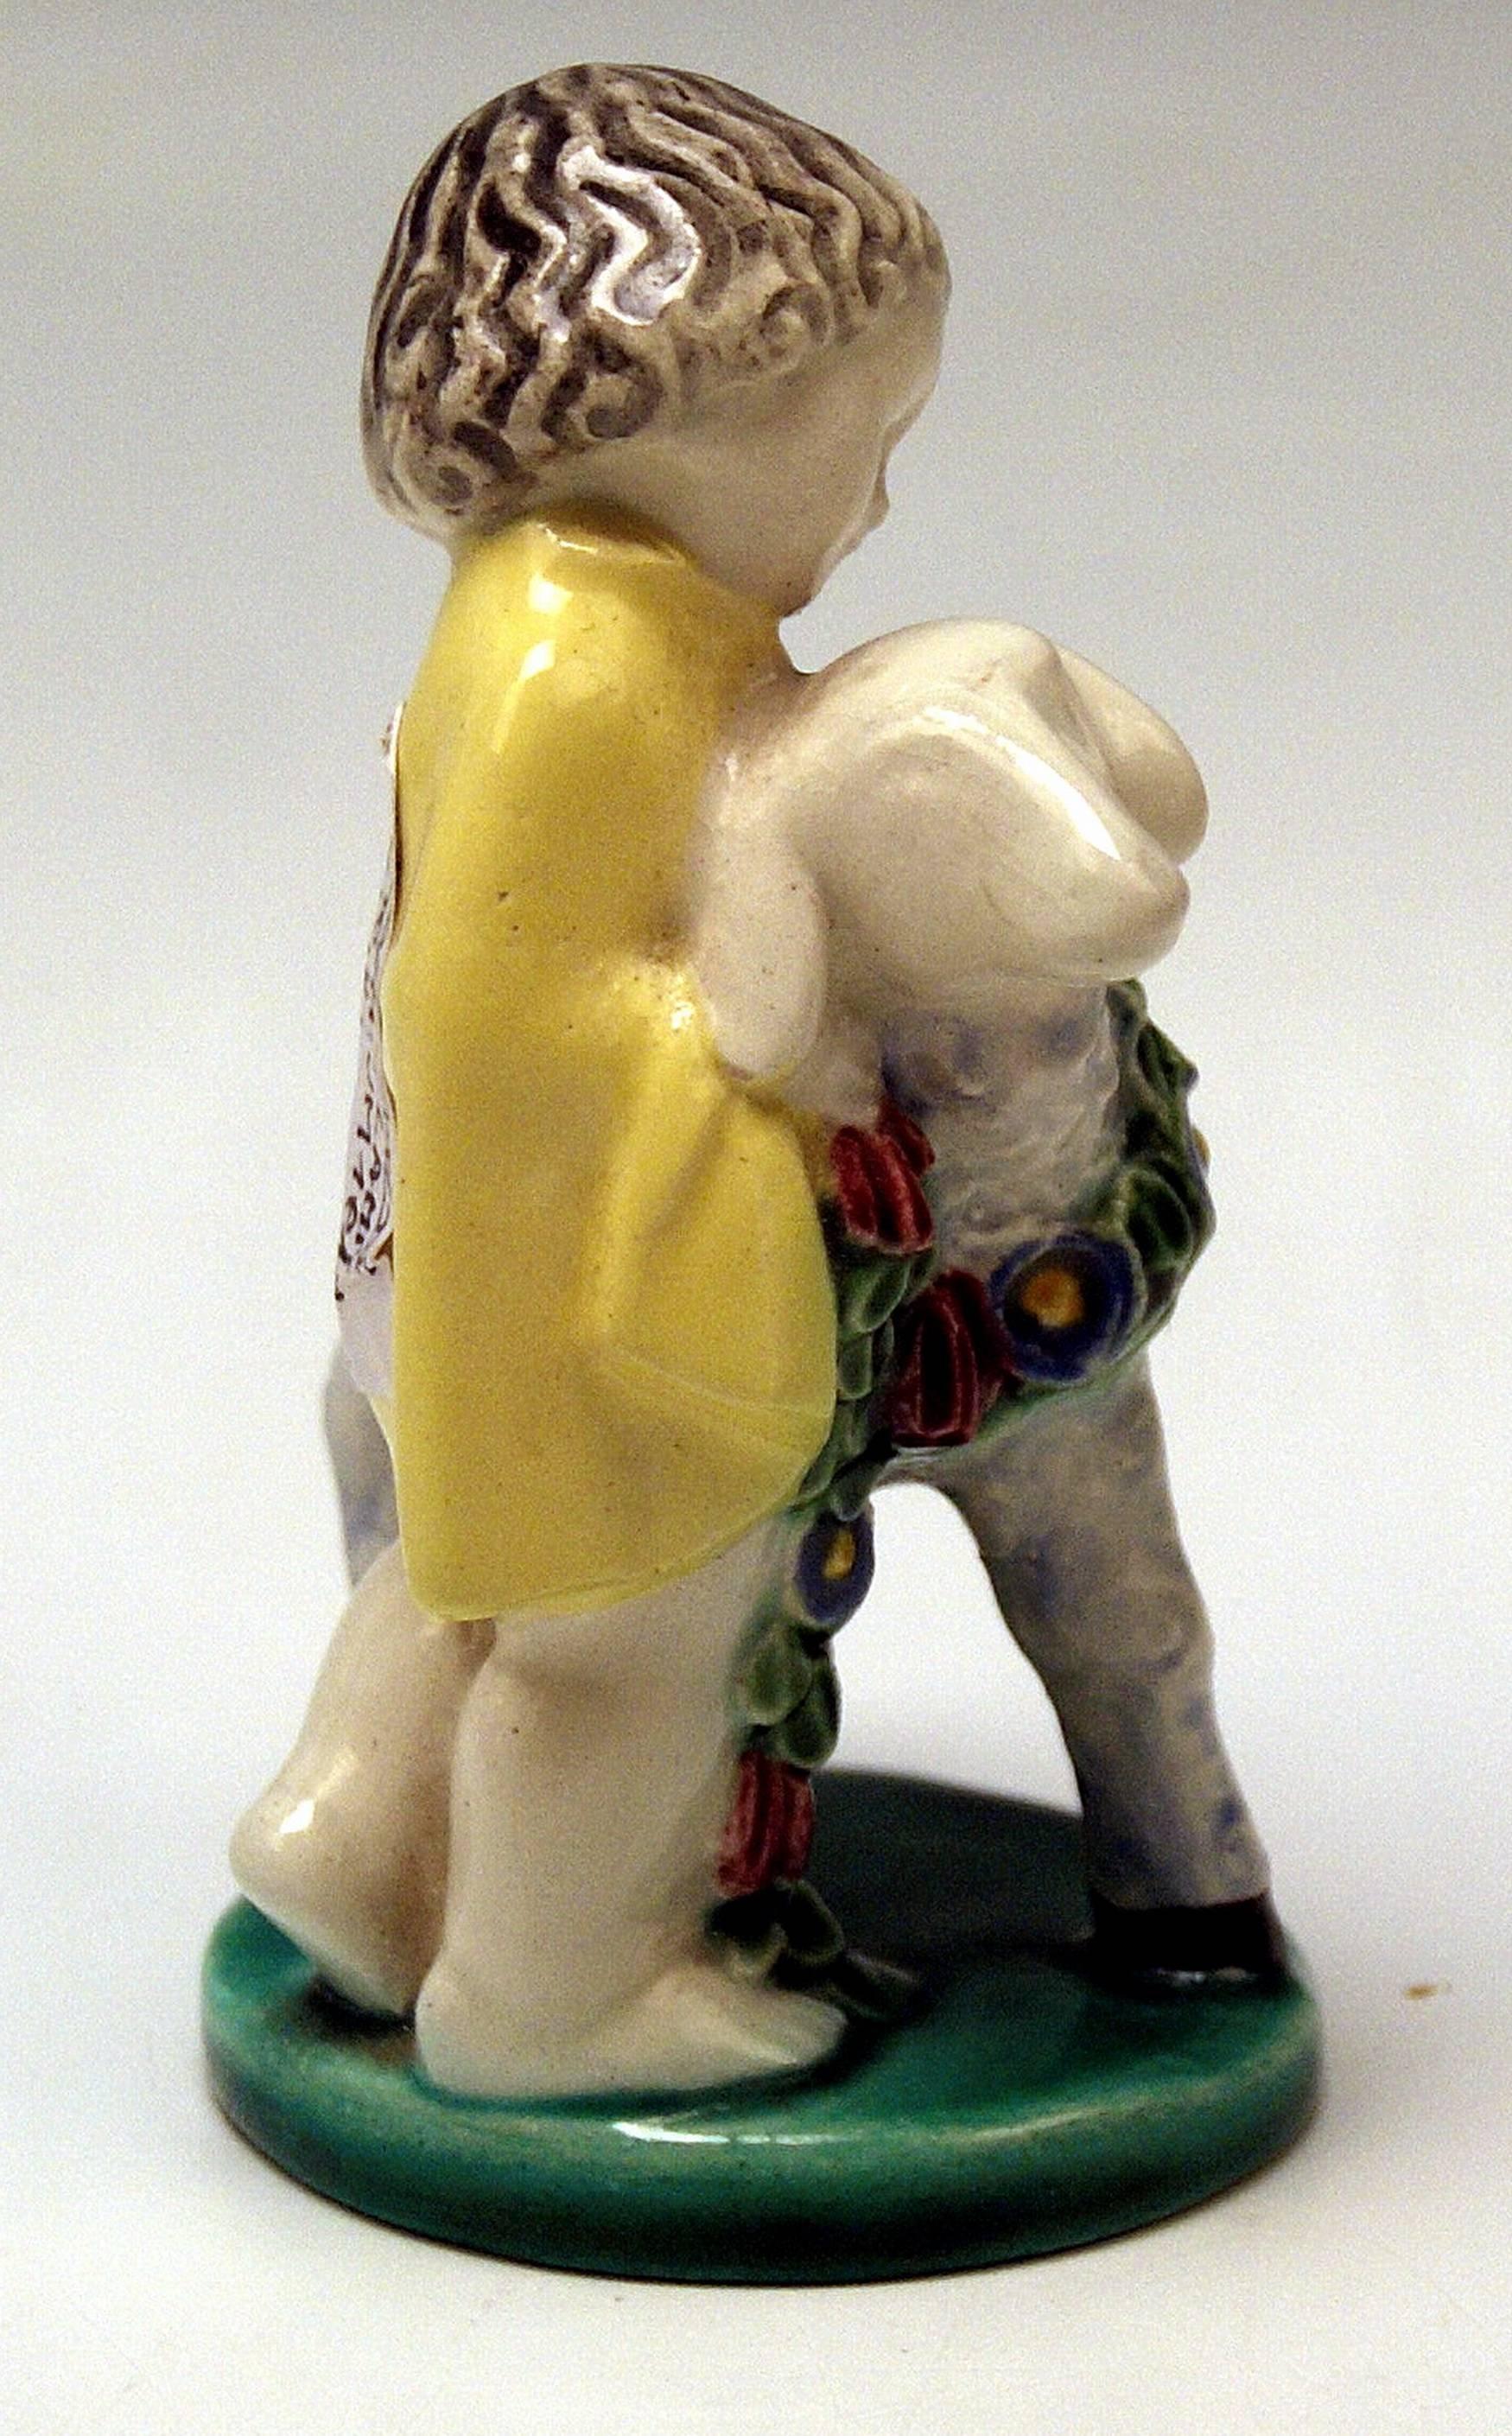 Michael Powolny Art Nouveau Child with Lamb.
Most lovely ceramics item !
Modelled by Michael Powolny (1871-1954), before 1910.

Hallmarked:
Manufactured by Wiener Keramik (Vienna Ceramics) & Gmunden Ceramics (WK & GK / hallmarked) //